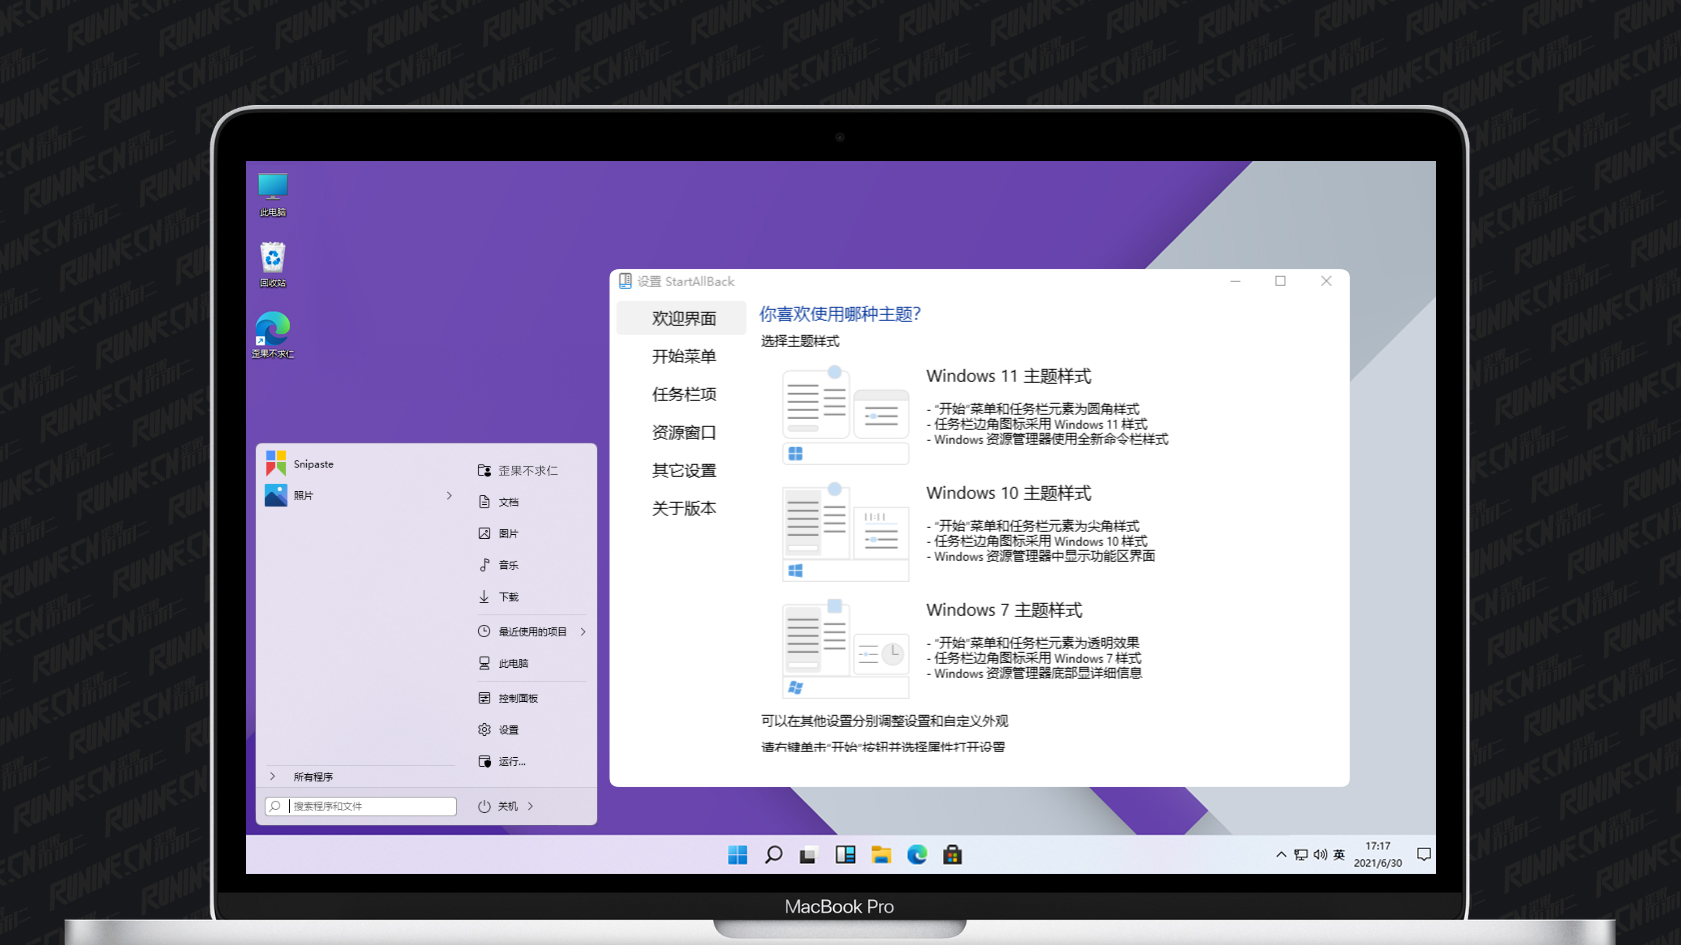 StartAllBack 3.6.10 instal the new version for windows